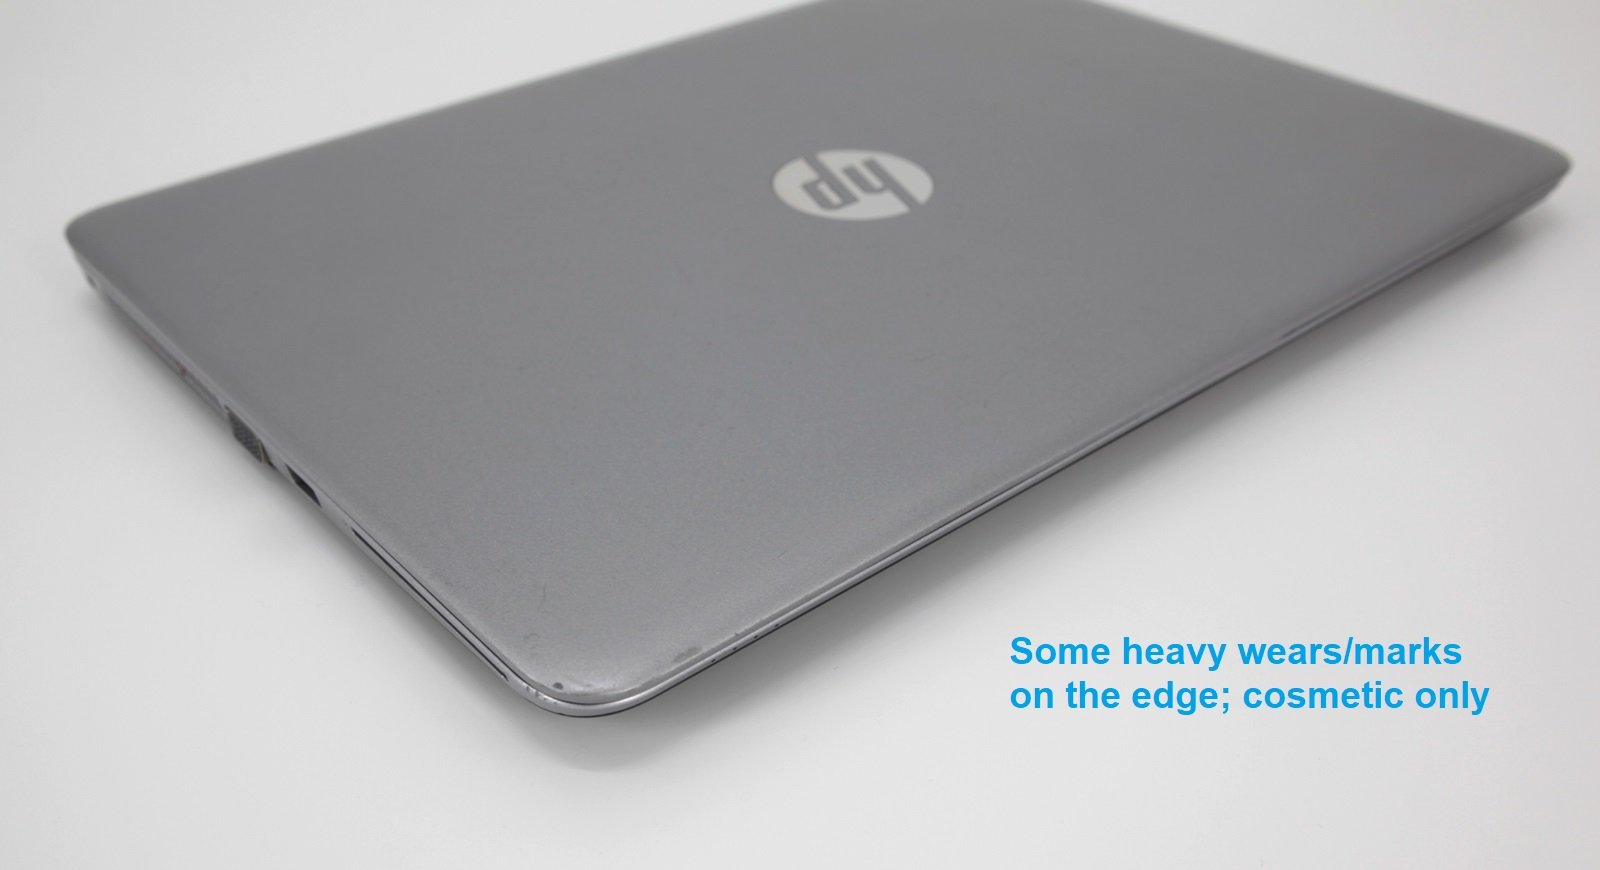 HP EliteBook 840 G3 Laptop: 240GB 6th Gen i5, 8GB RAM Warranty VAT (Grade C) - CruiseTech